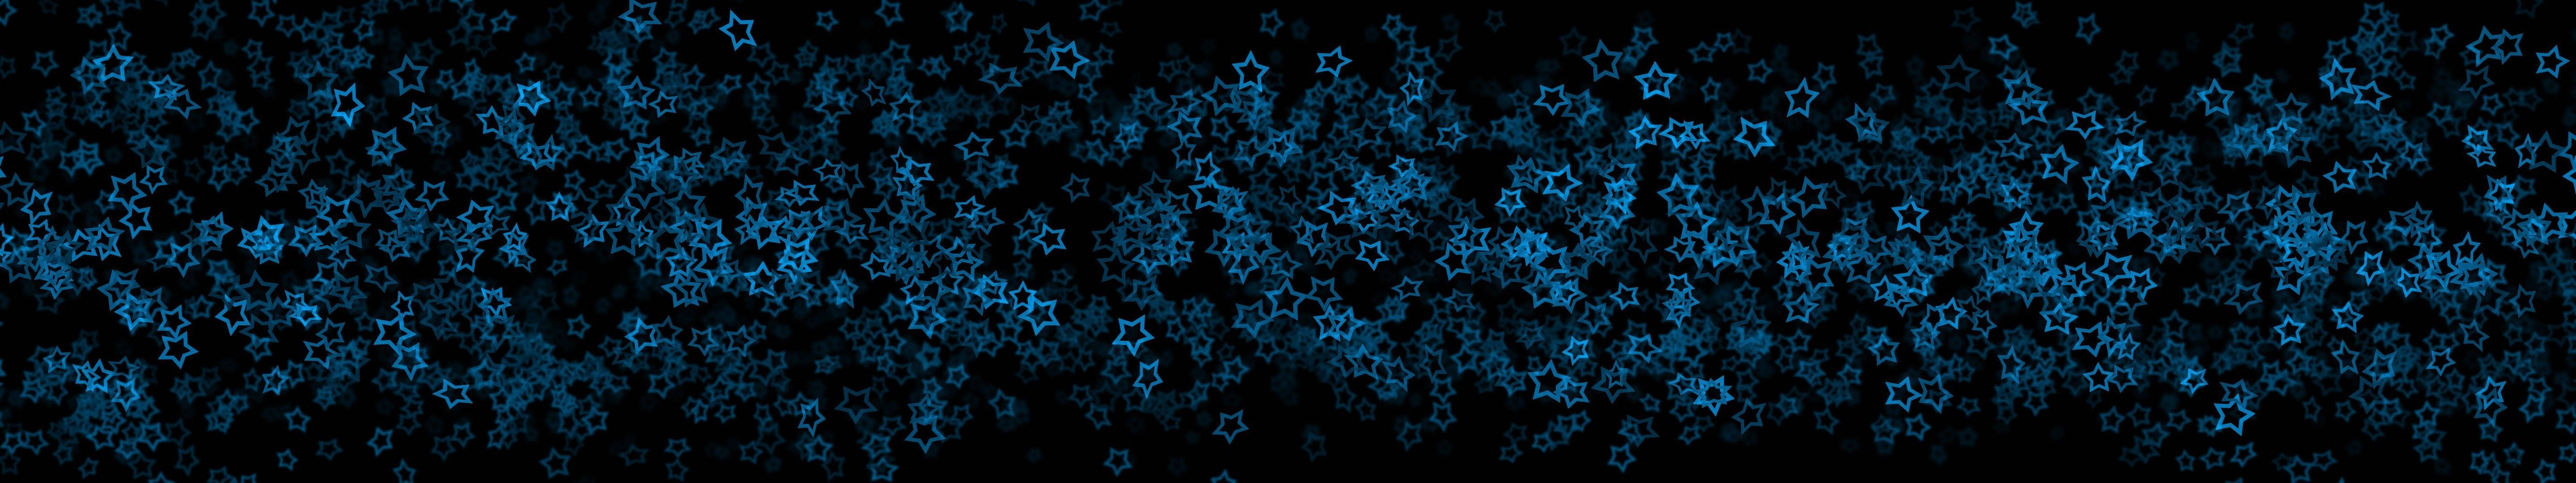 Dark Abstract Blue Star Confetti Wallpaper